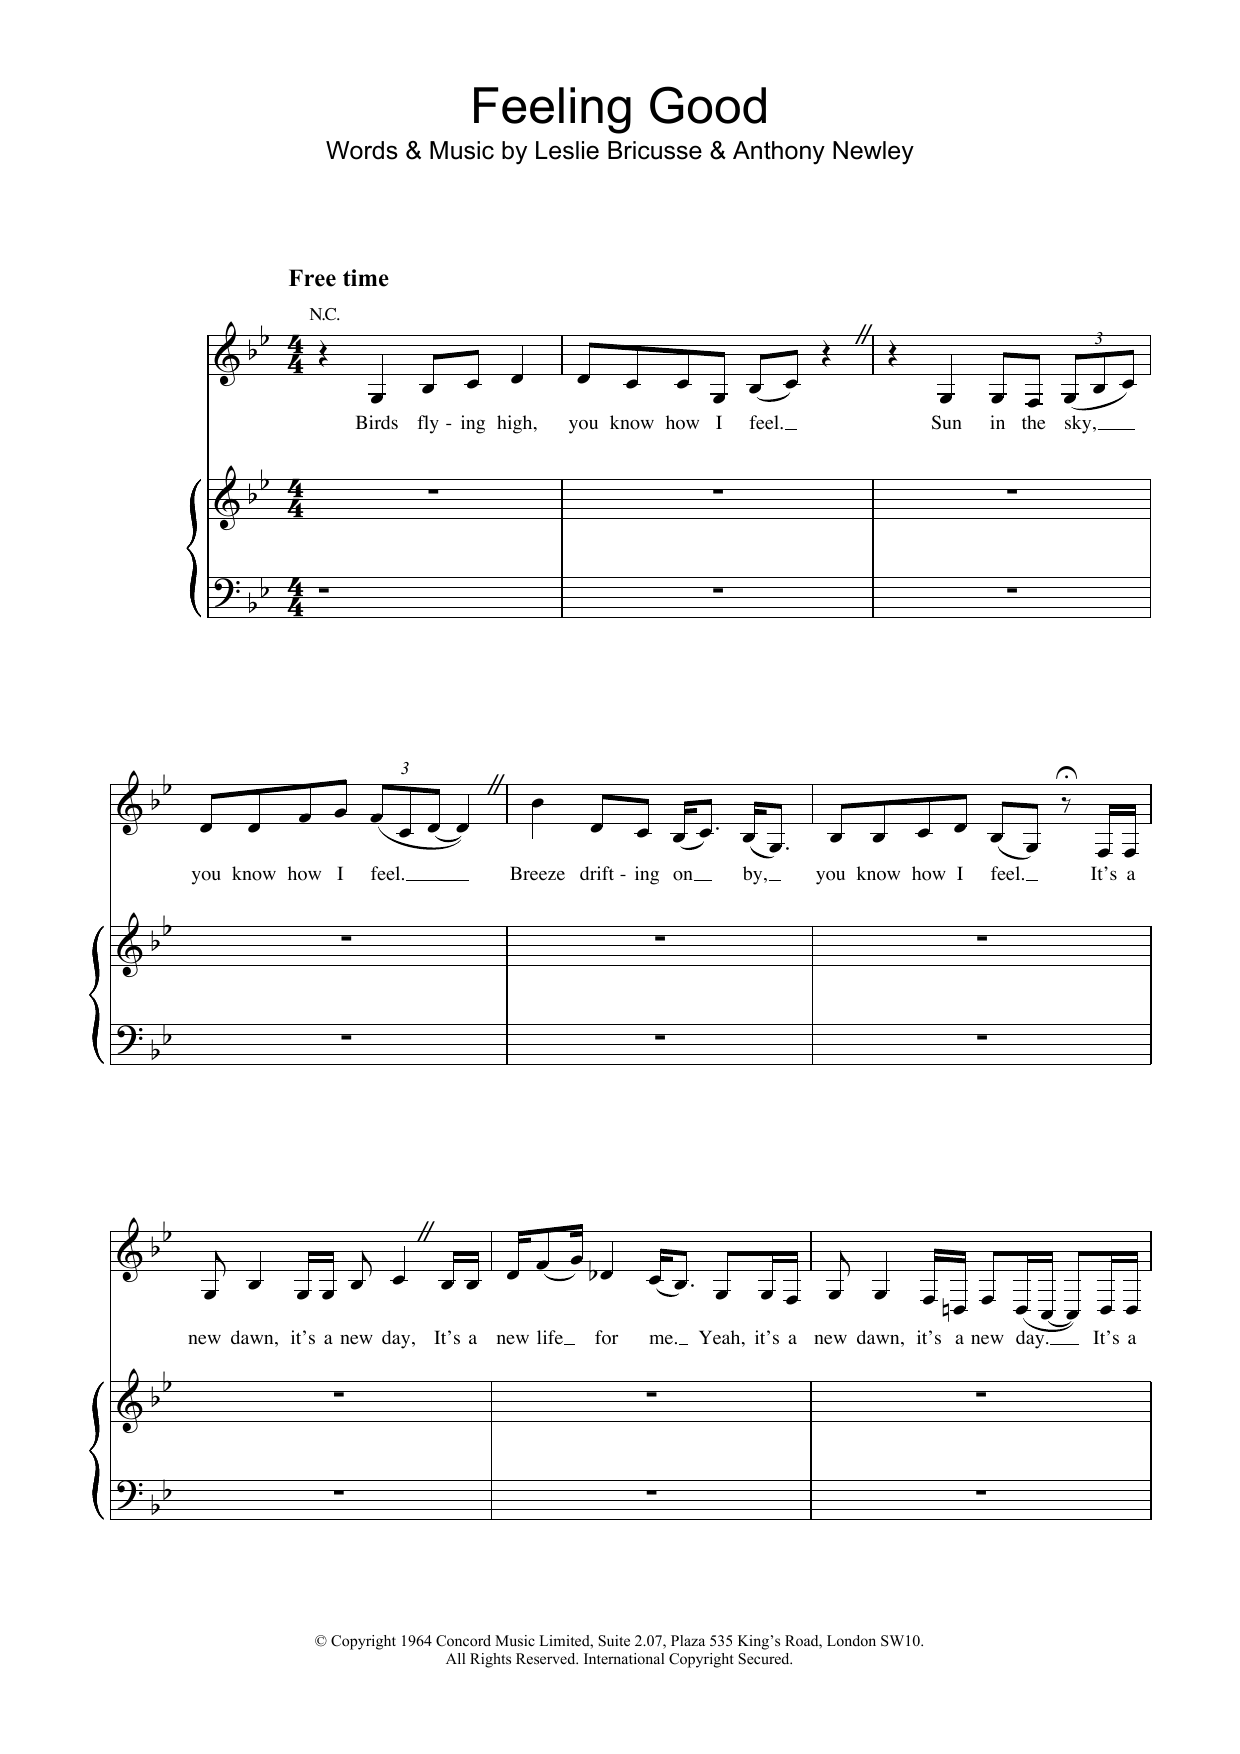 Nina Simone Feeling Good Sheet Music Notes & Chords for Piano & Vocal - Download or Print PDF